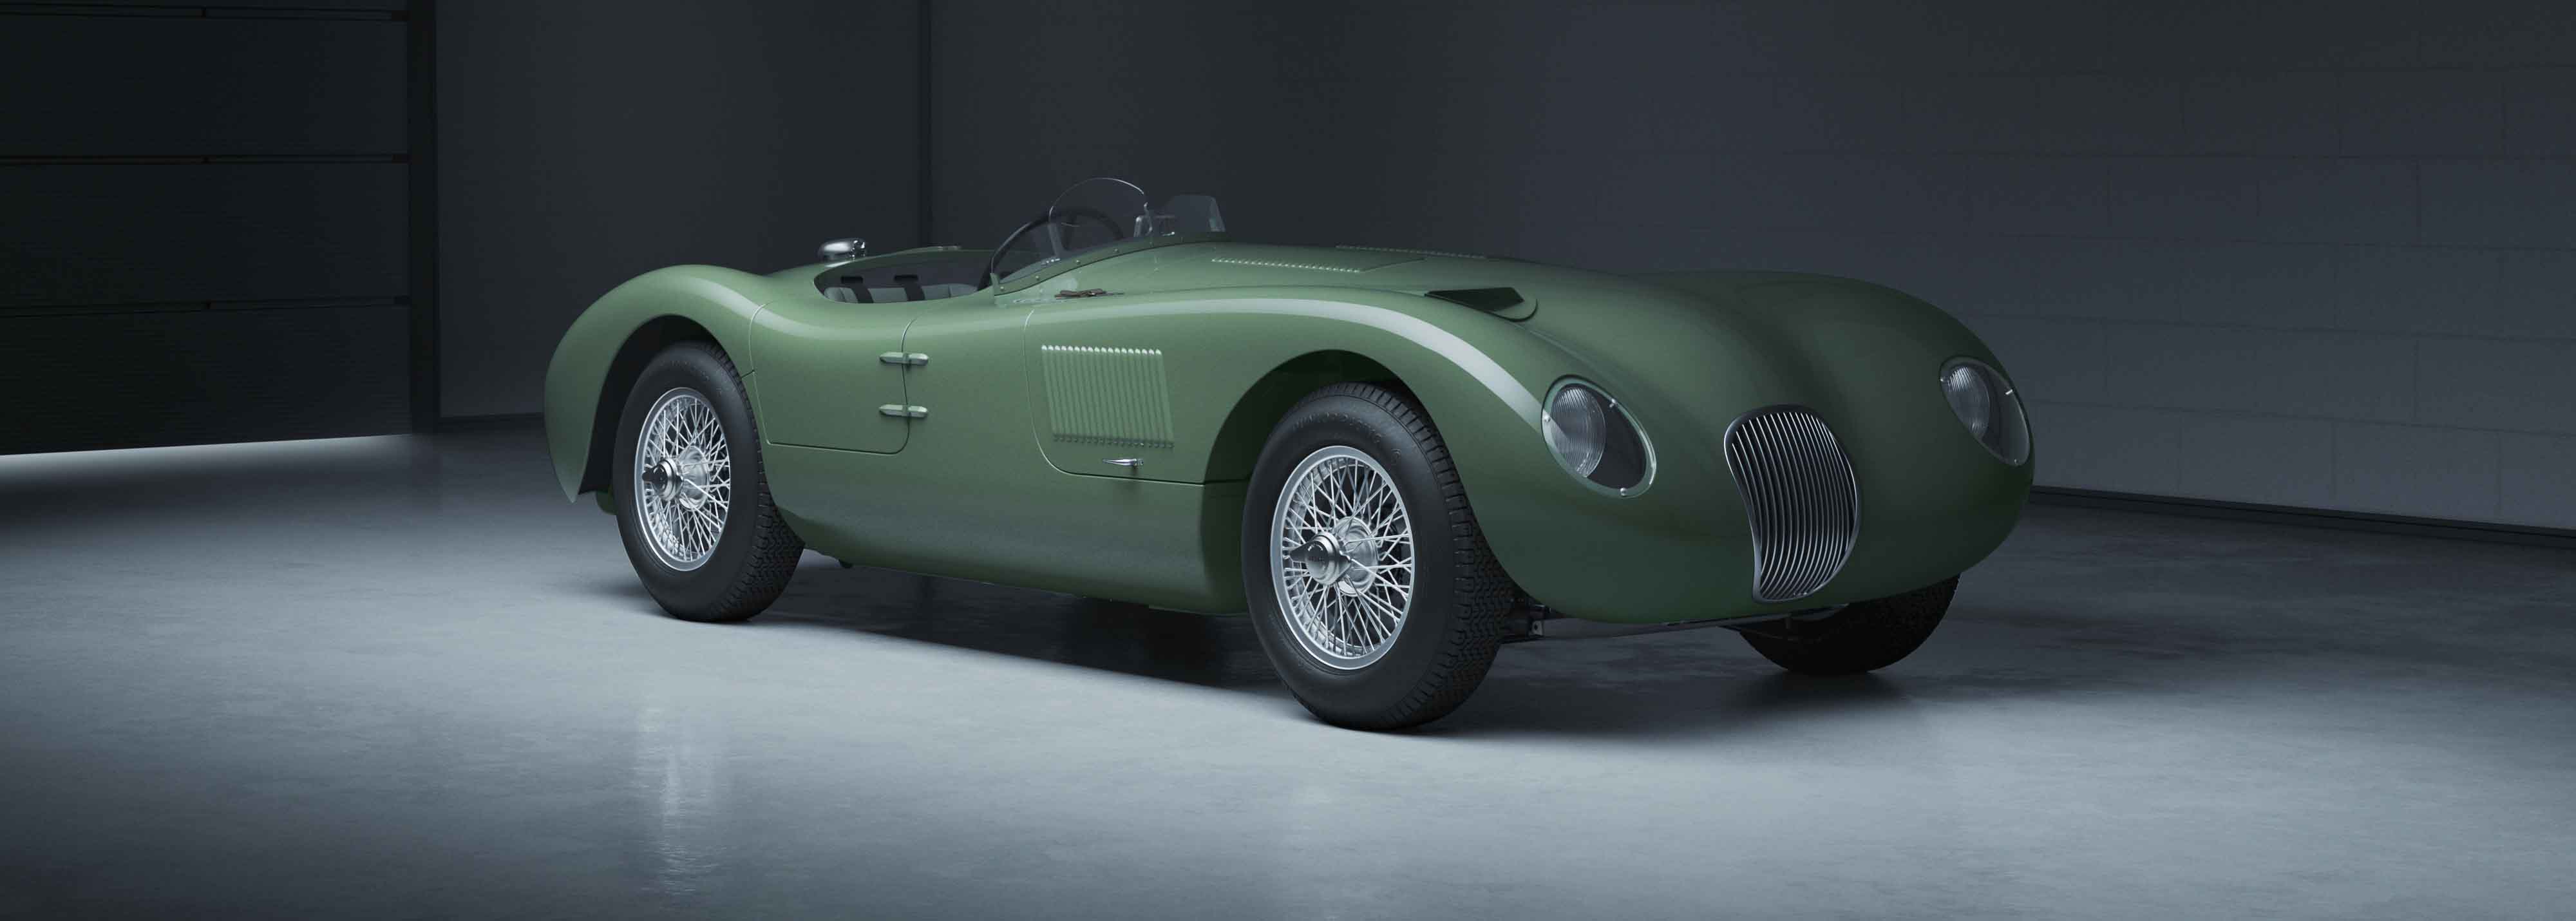 Jaguar C-Type joins Classic Continuation family